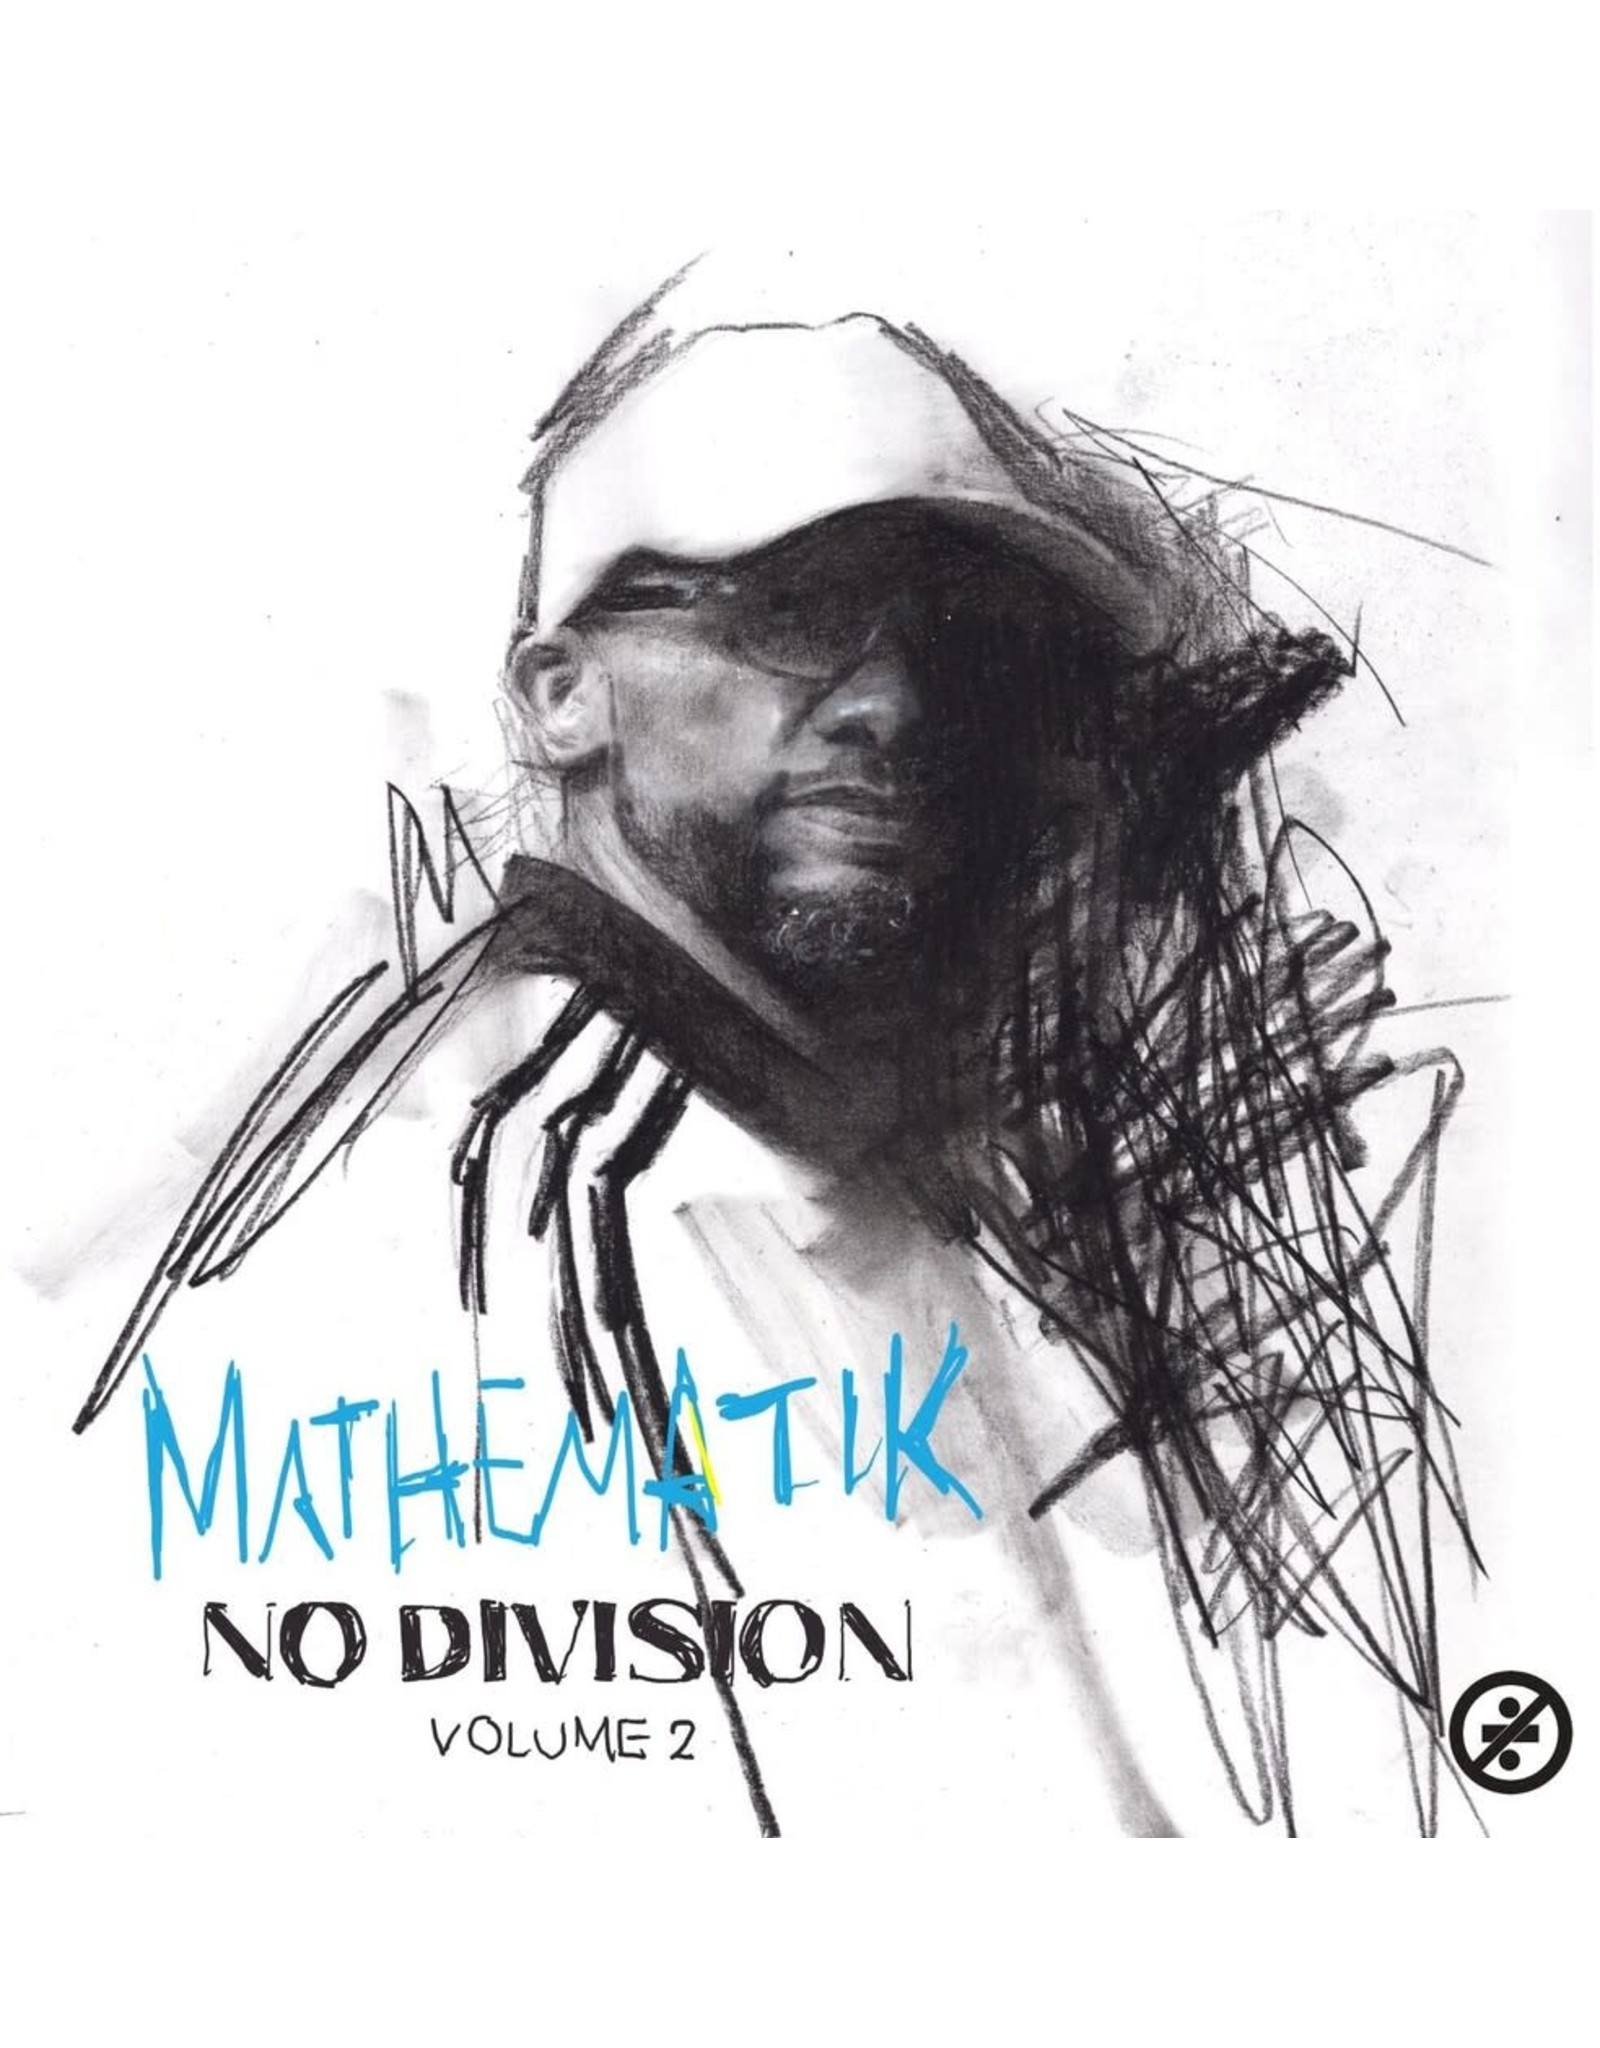 Mathematik - No Division Volume 2 LP